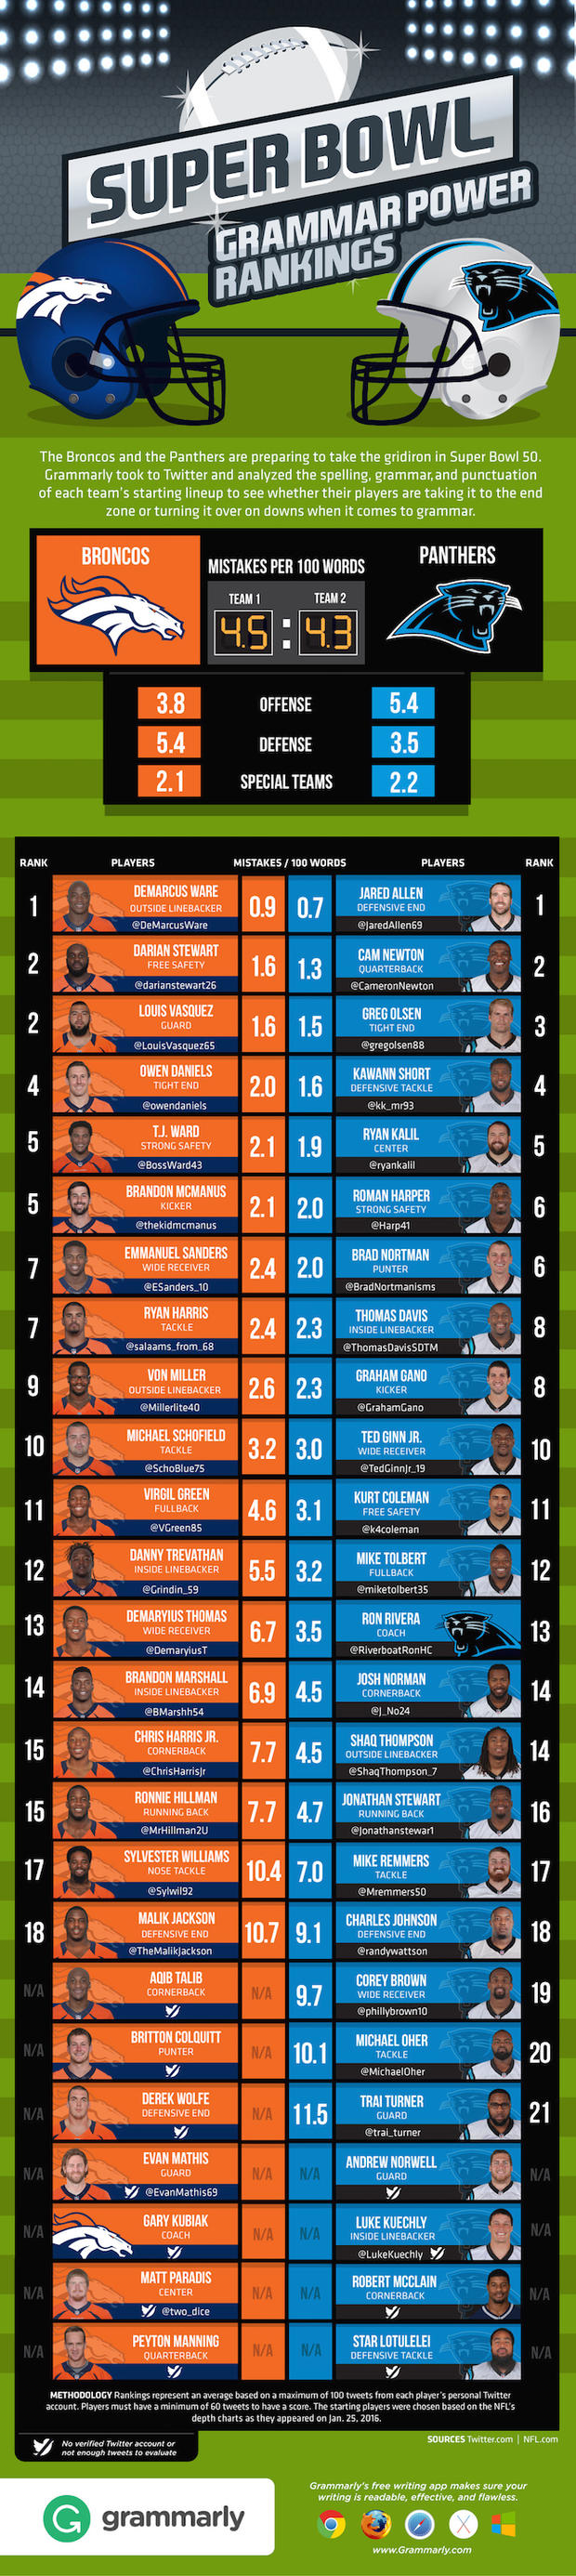 Super-Bowl-Grammar-Power-Rankings-Infographic-copy 